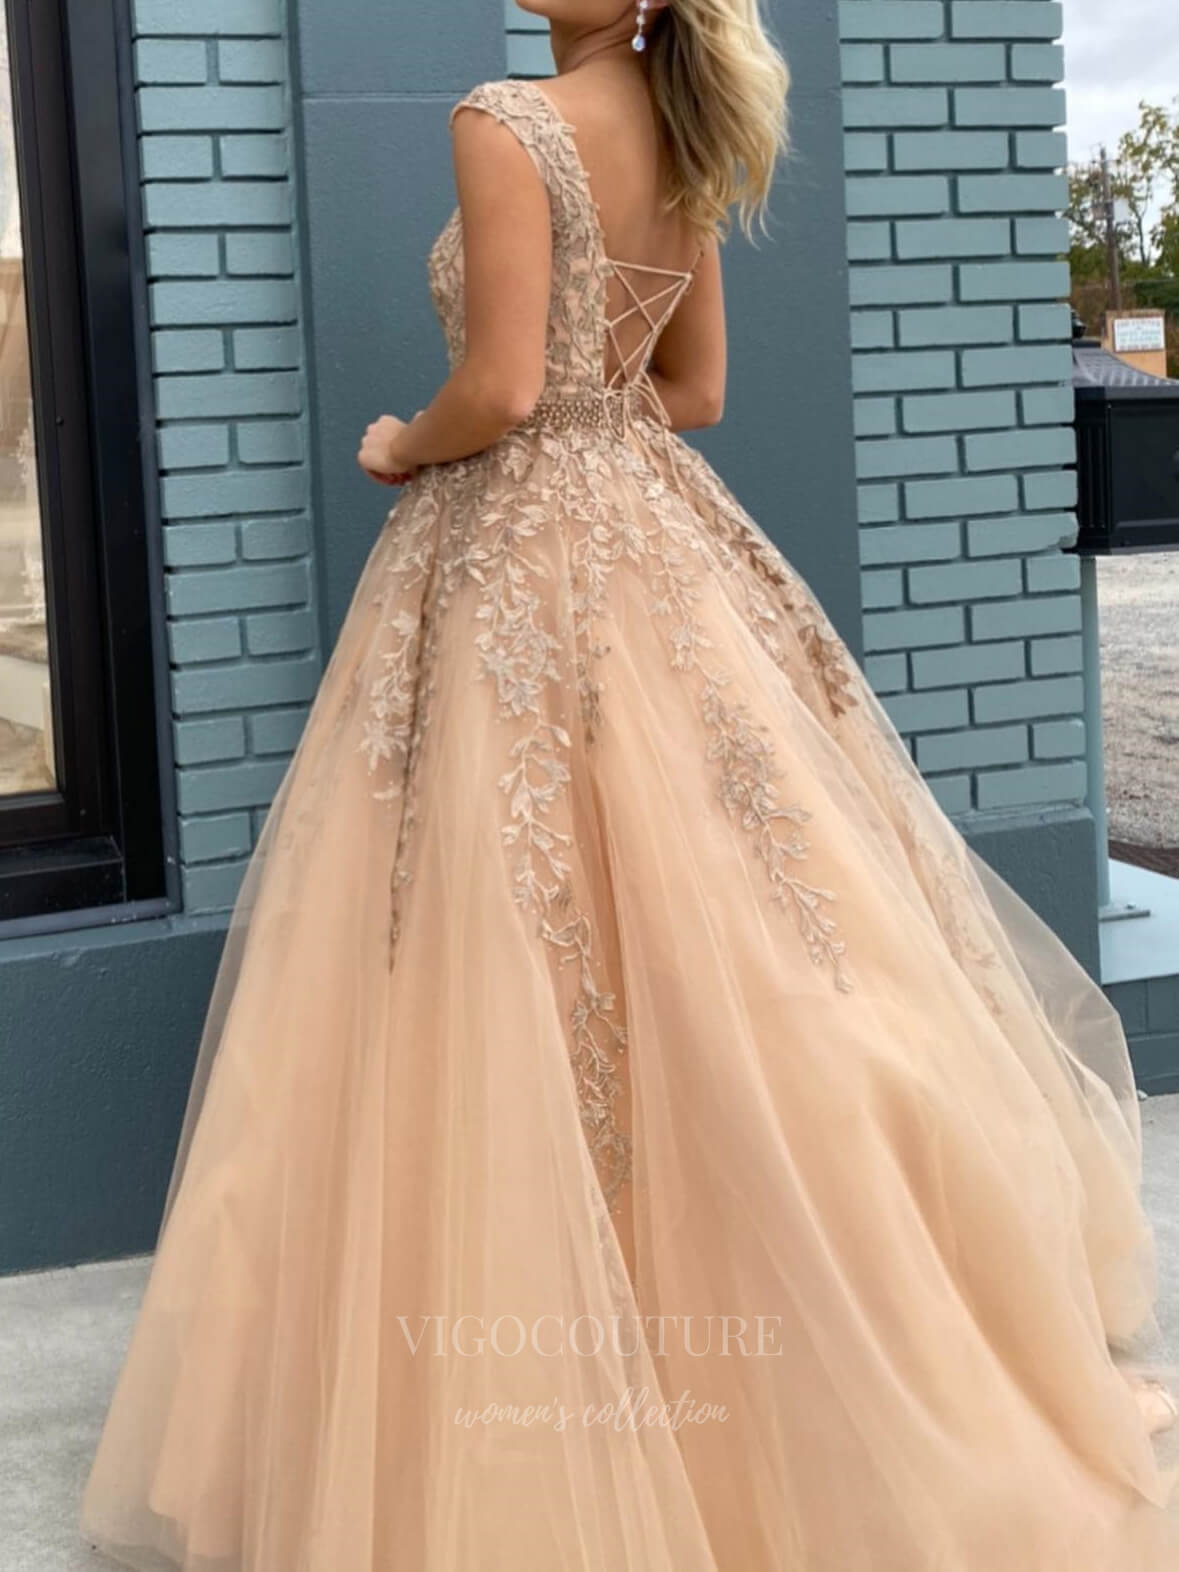 vigocouture-Khaki Lace Applique Prom Dresses A-Line Evening Dress 20928-Prom Dresses-vigocouture-